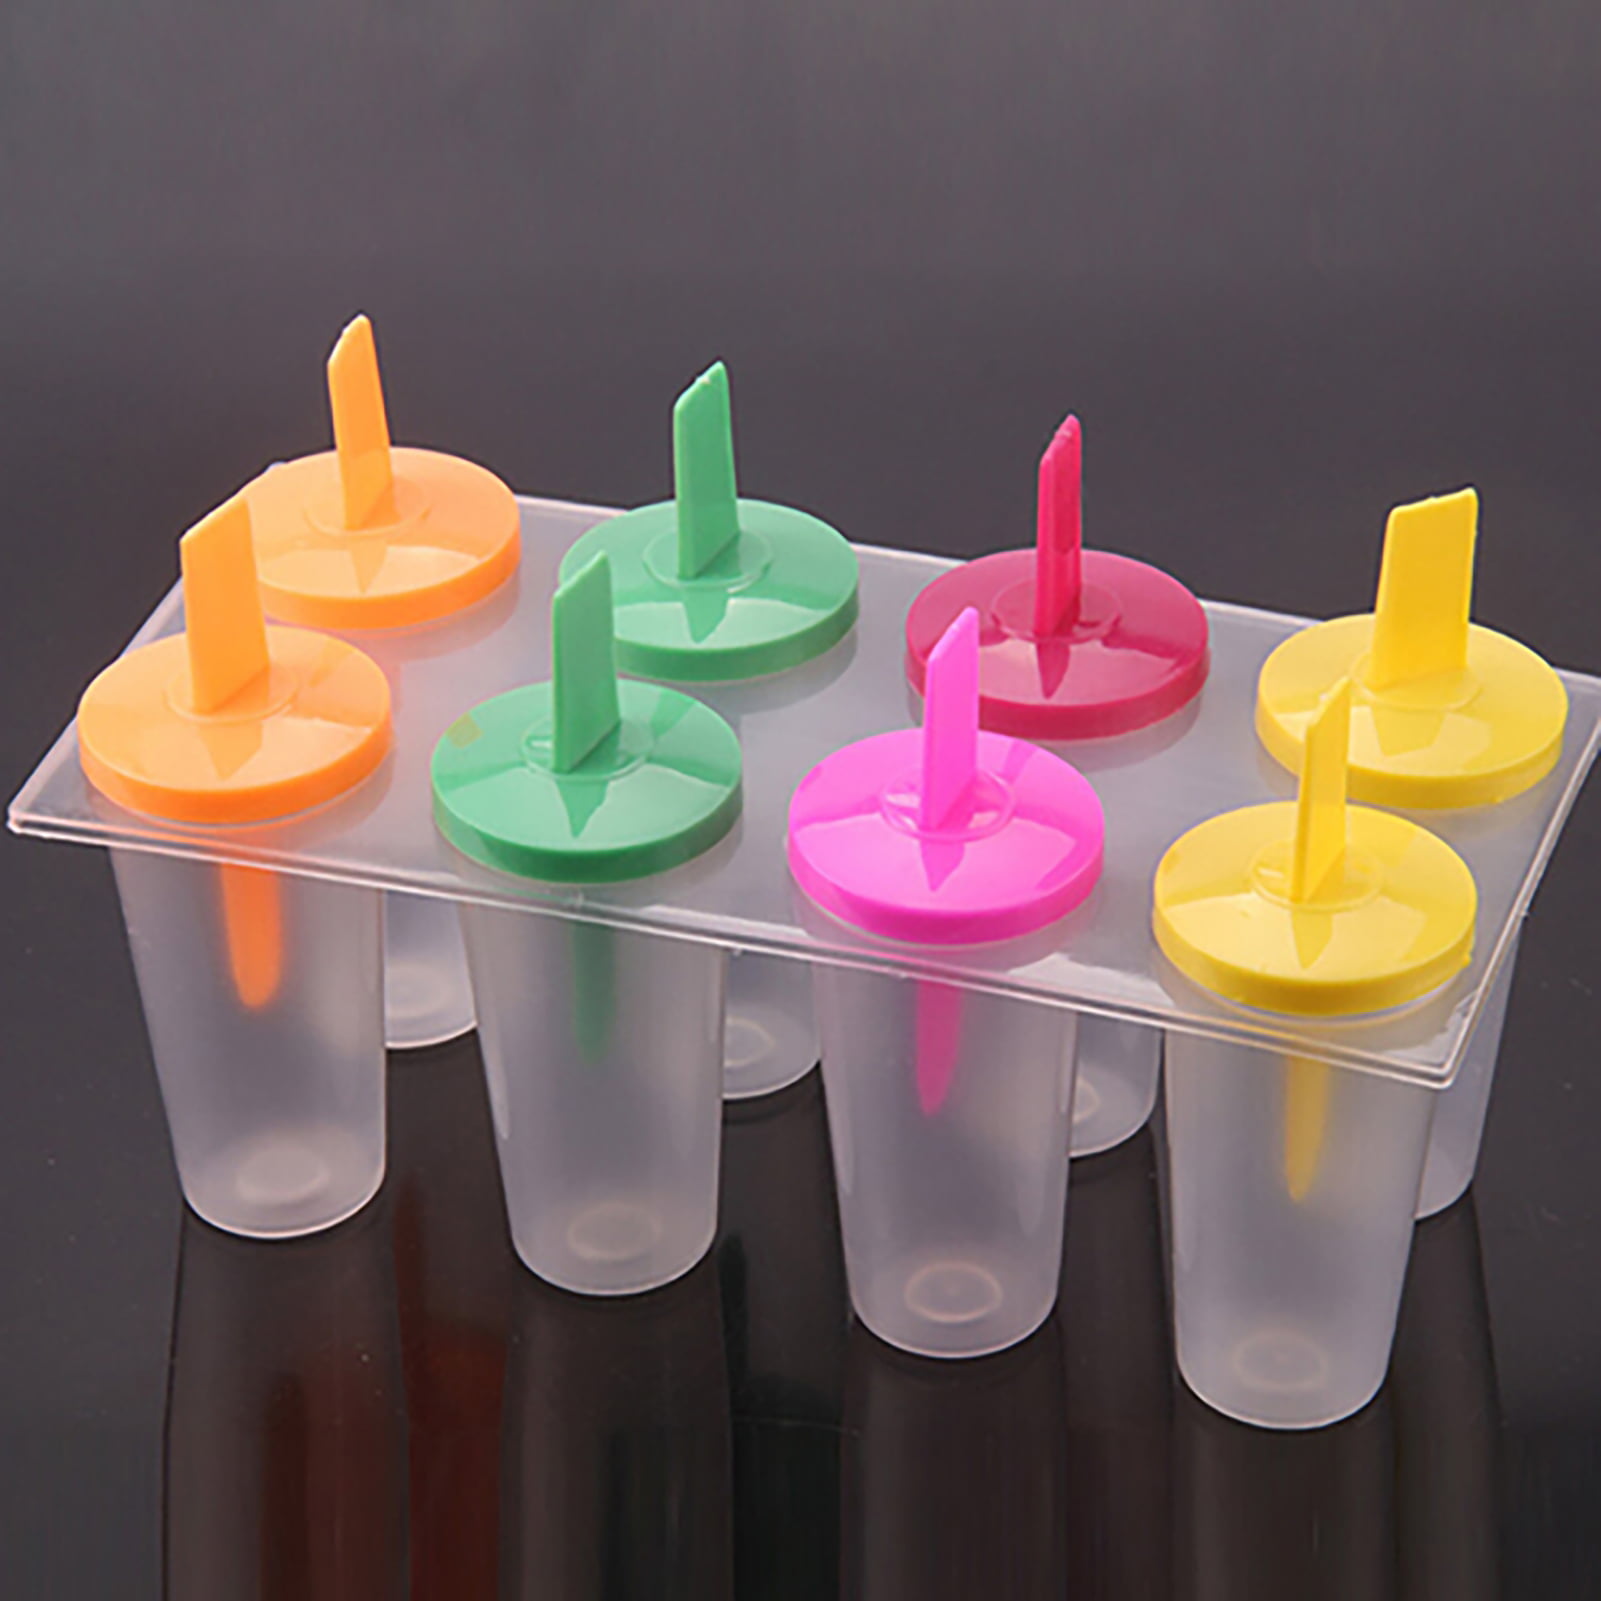  Mvckyi 4800pcs/day Commercial Ice Mold Popsicle